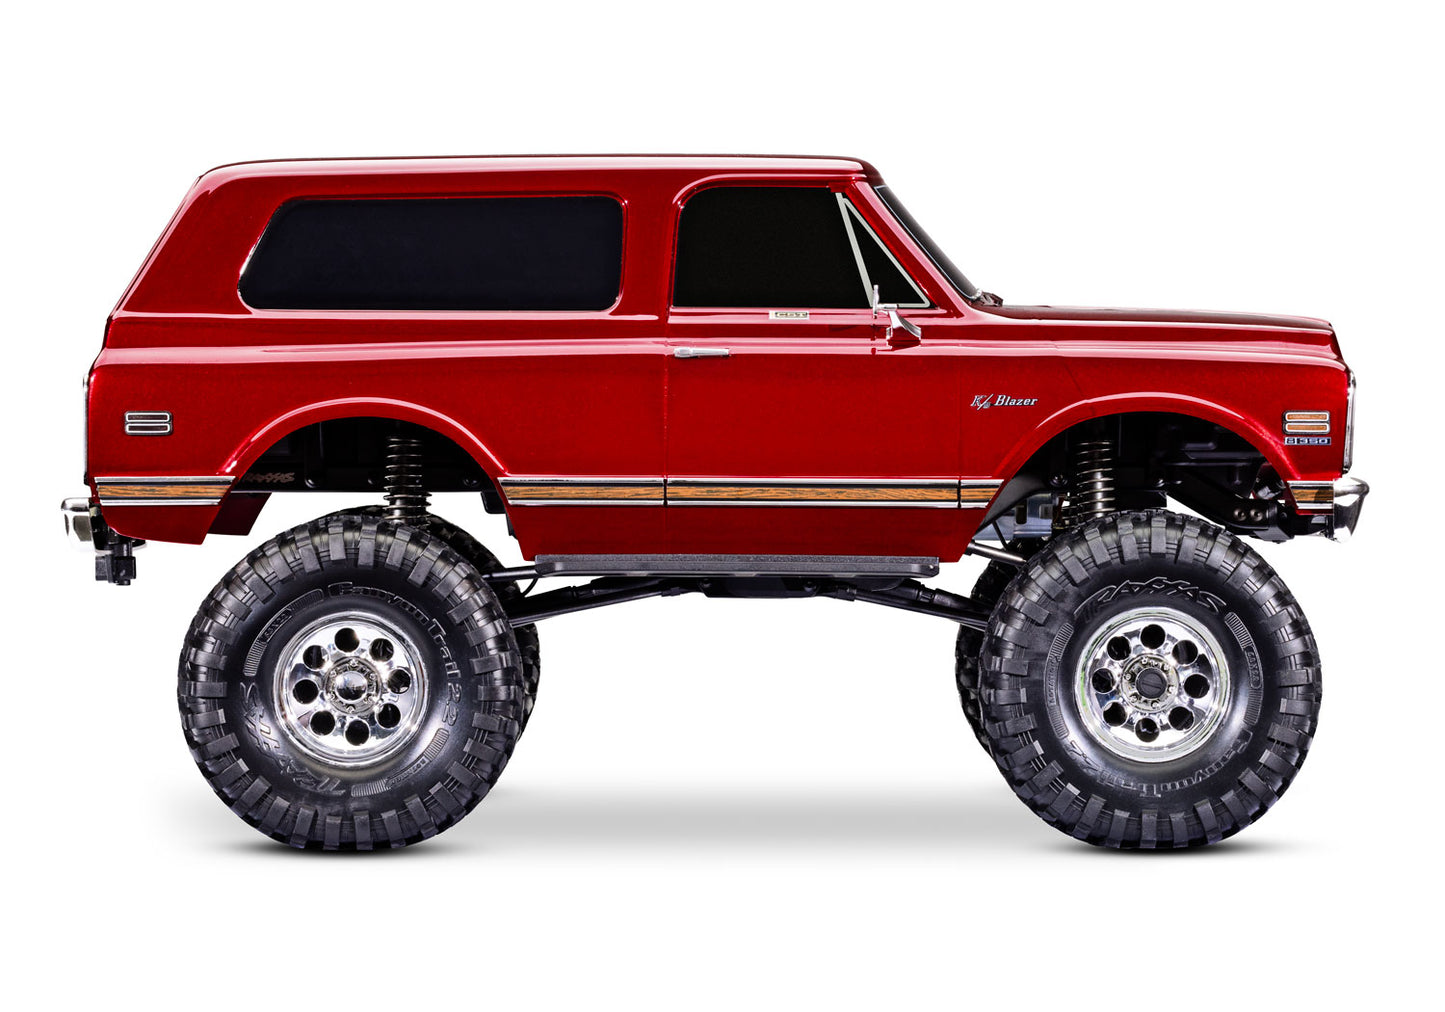 92086-4 TRX-4 Chevrolet K5 Blazer High Trail Edition Red